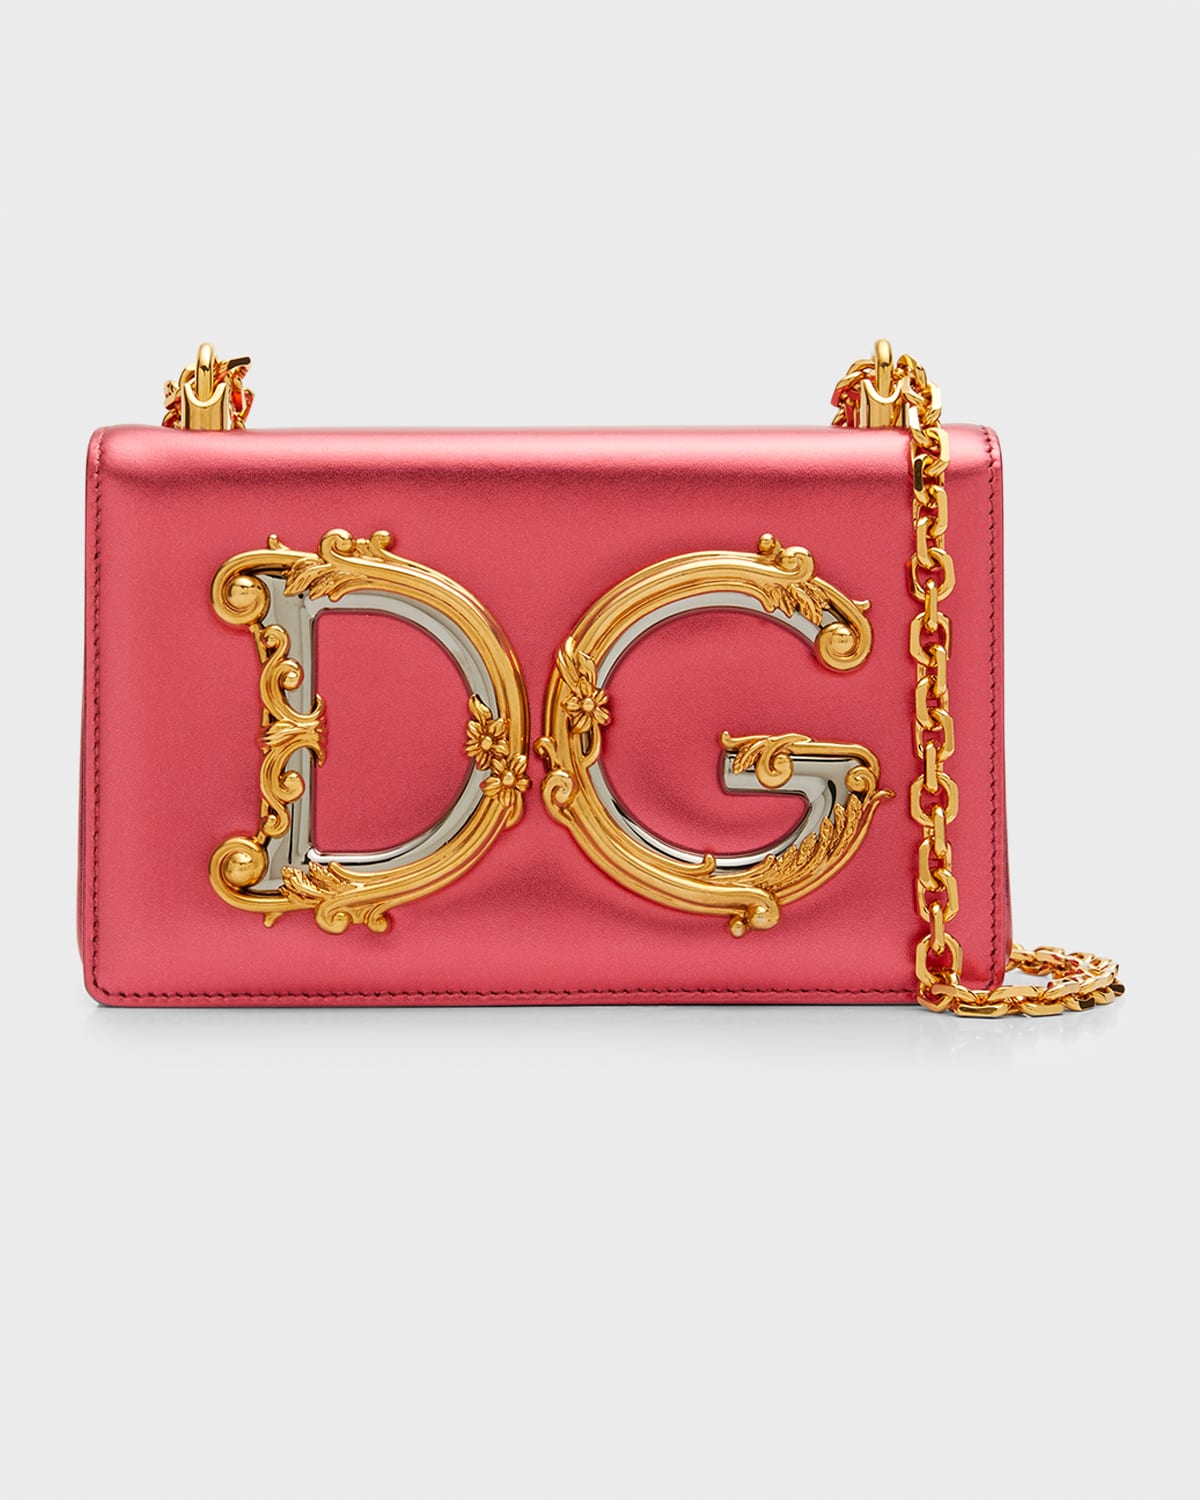 Dolce & Gabbana DG Girls Medium Metallic Chain Shoulder Bag